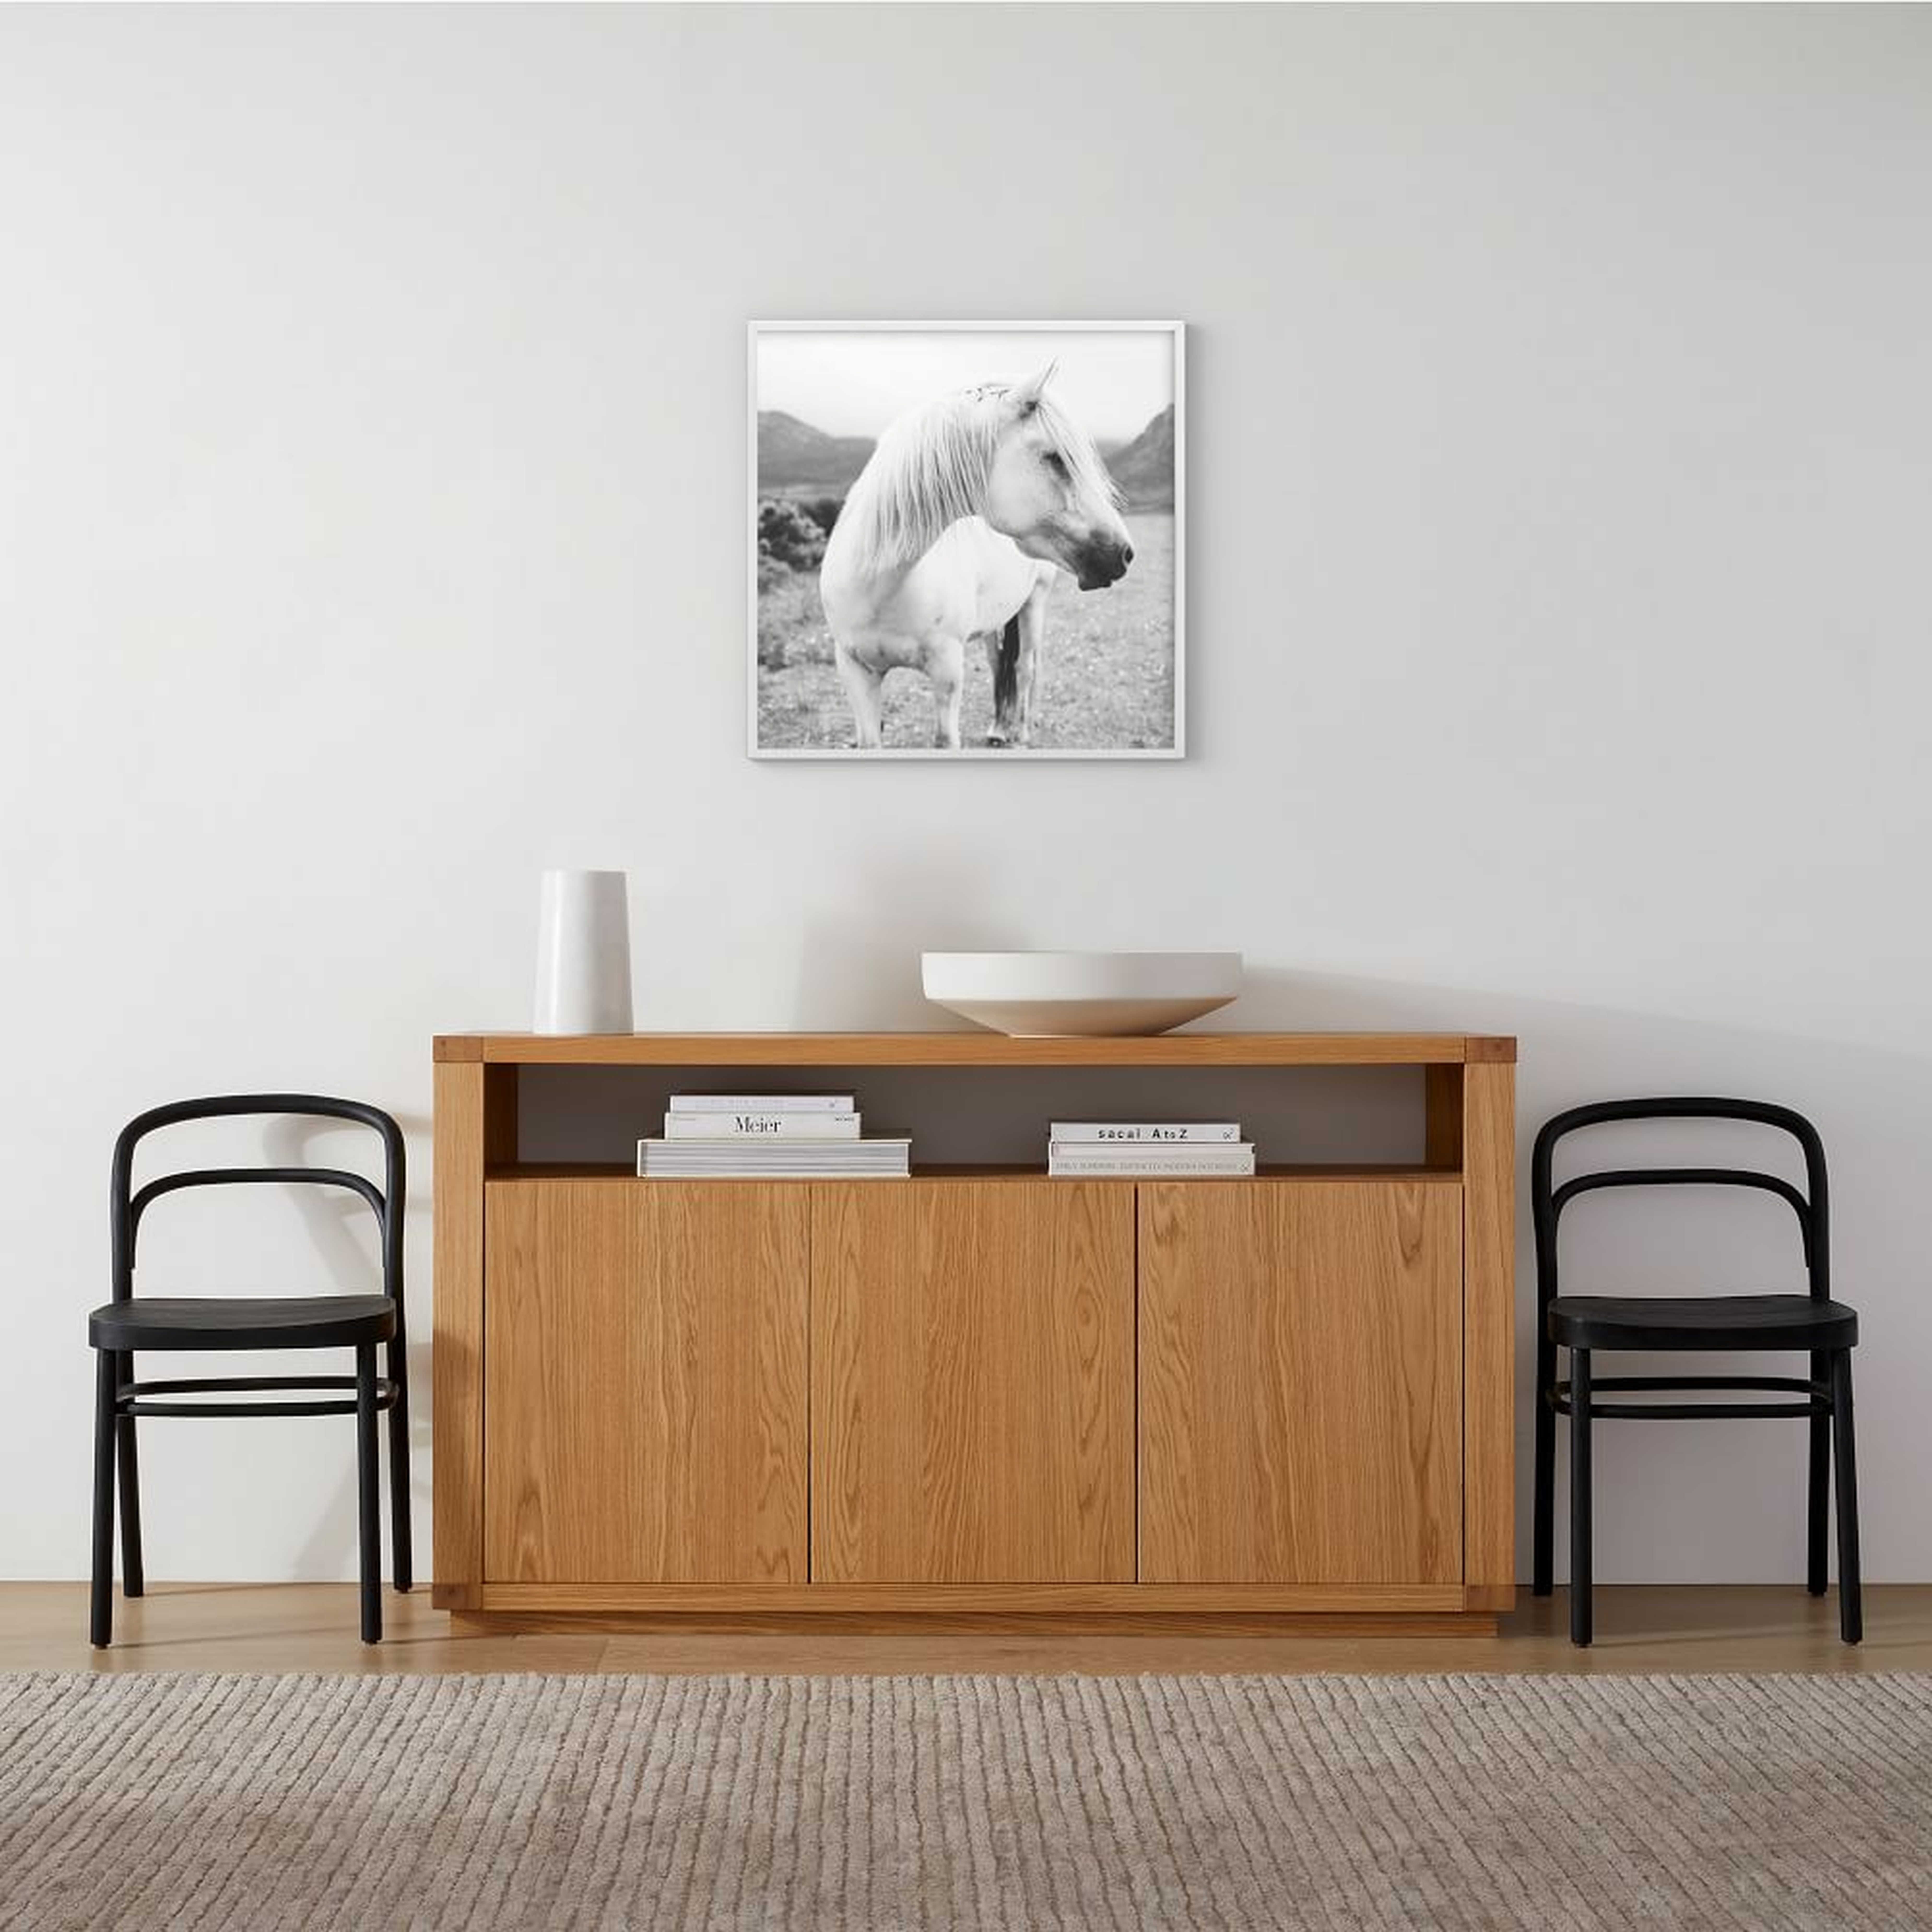 Field Horse, White Wood Frame, 30"x30" - West Elm